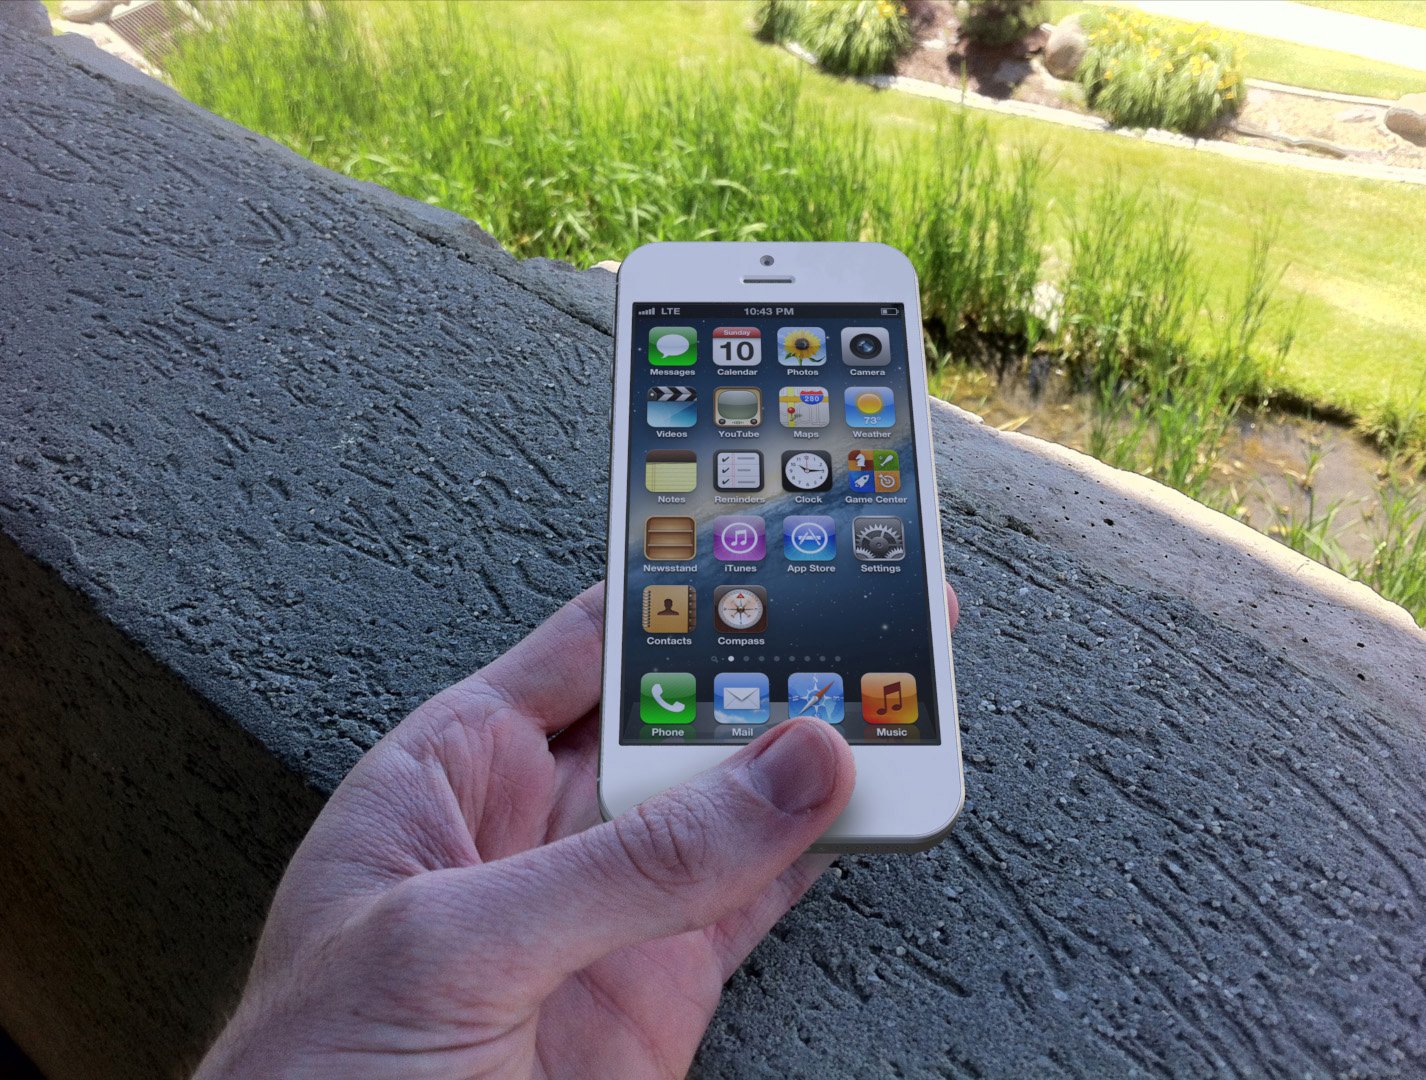 iPhone 5 Rendering mit 4 Zoll